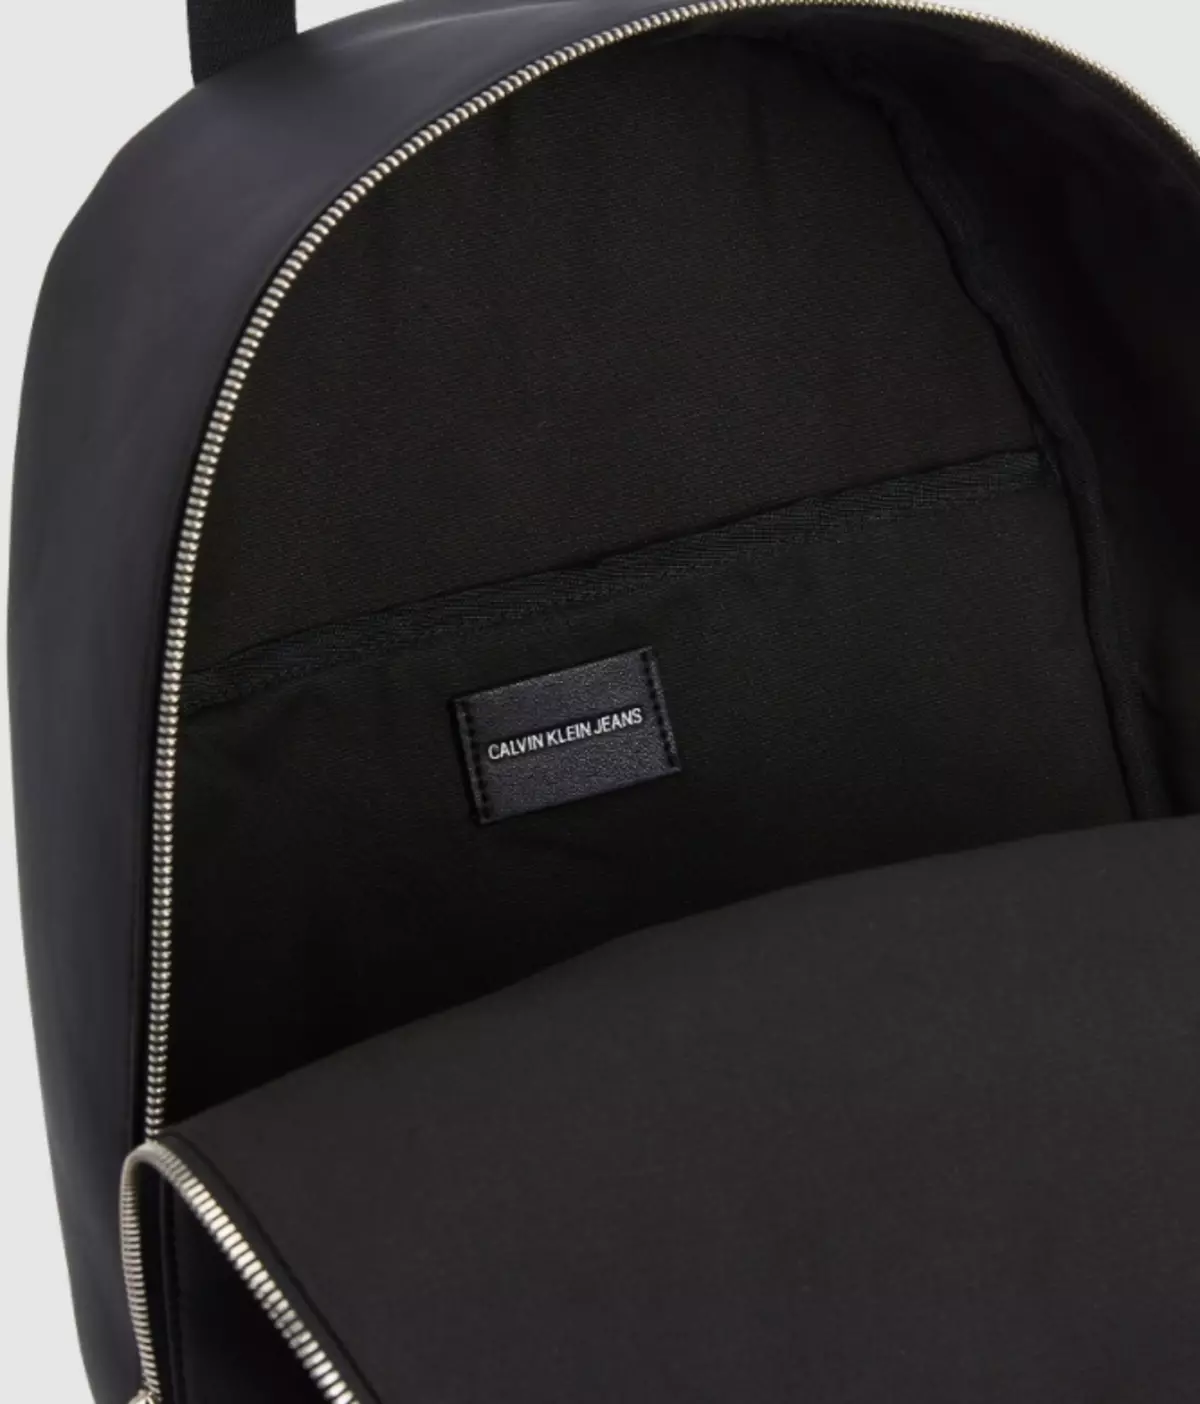 Calvin Klein Backpacks: Black Kike na Mwanaume, Leather Red, White, Yellow Kwa Monogramm na Rangi nyingine Mifuko - Backpacks 15401_39